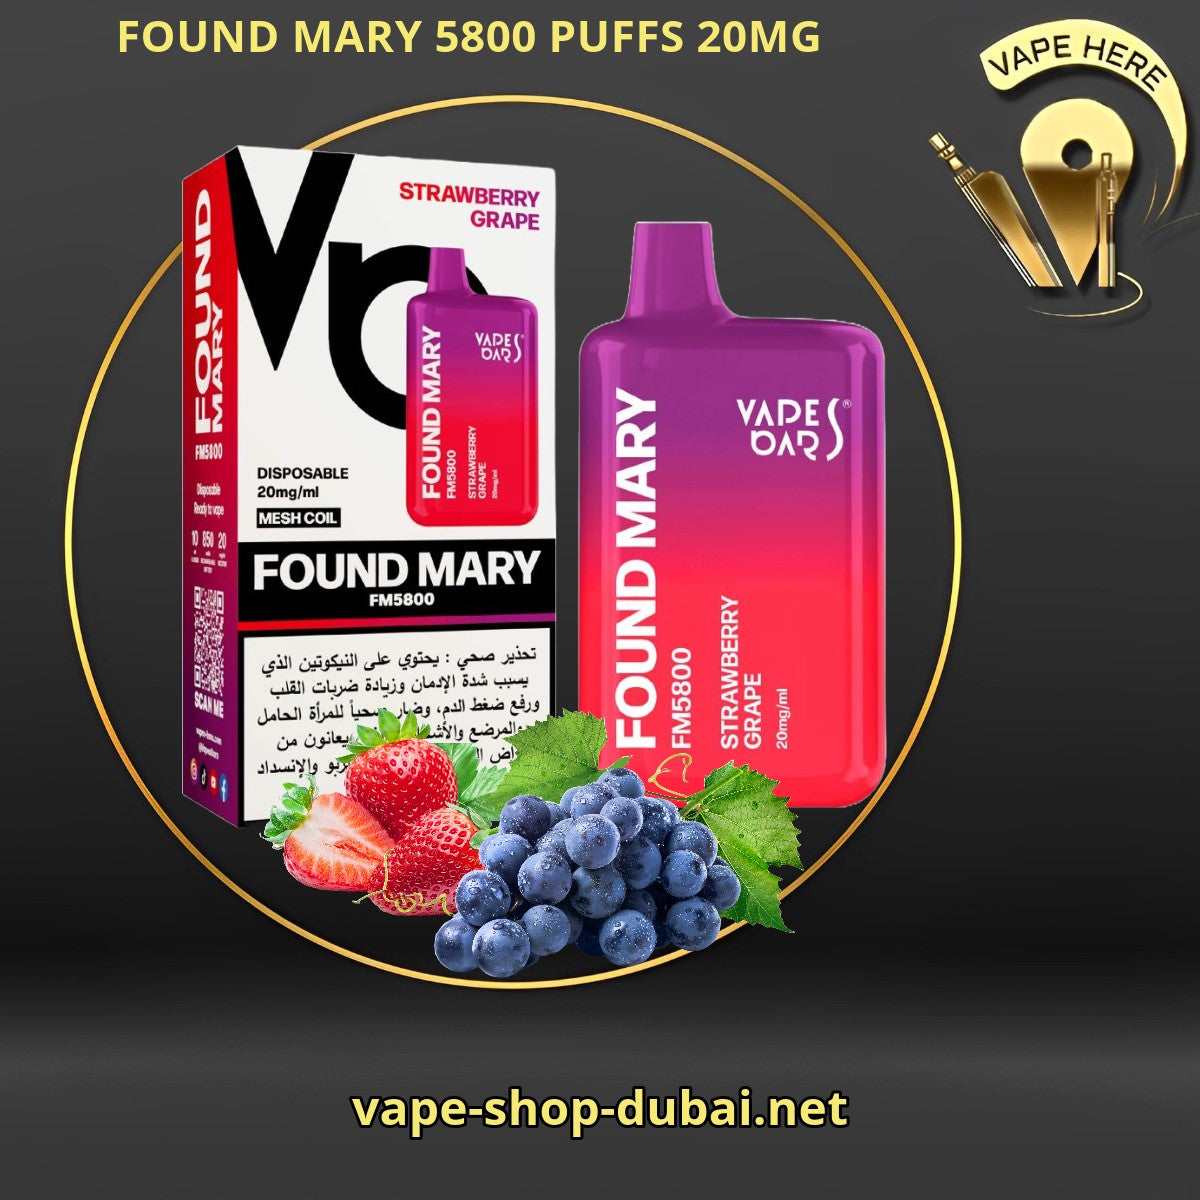 FOUND MARY FM 5800 PUFFS 20MG Strawberry Grape DISPOSABLE VAPE BY VAPE BARS UAE Dubai